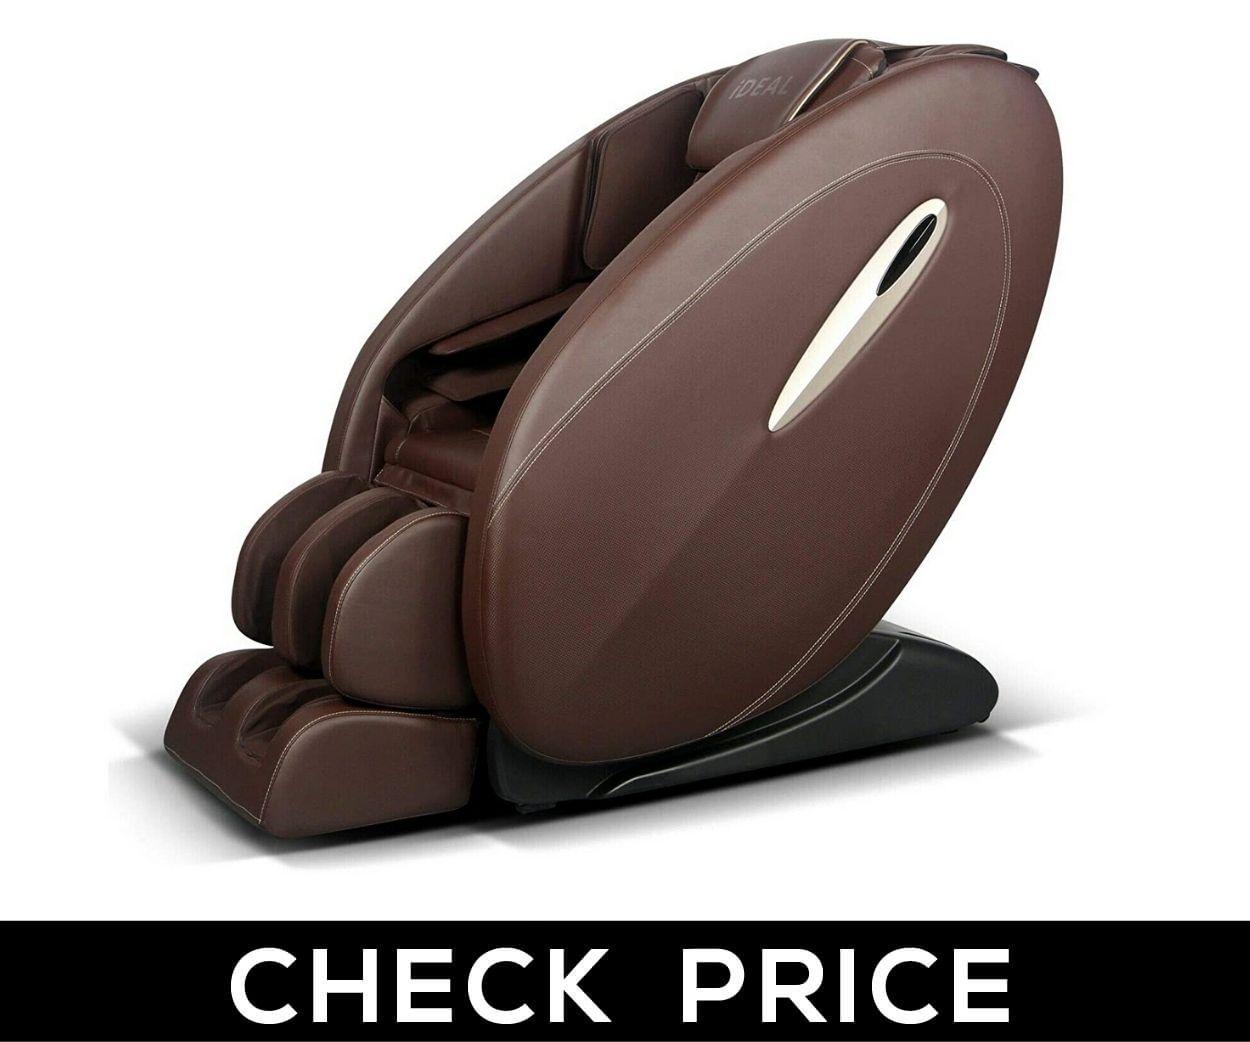 Ideal Massage â€“ Best Shiatsu Massage Chair